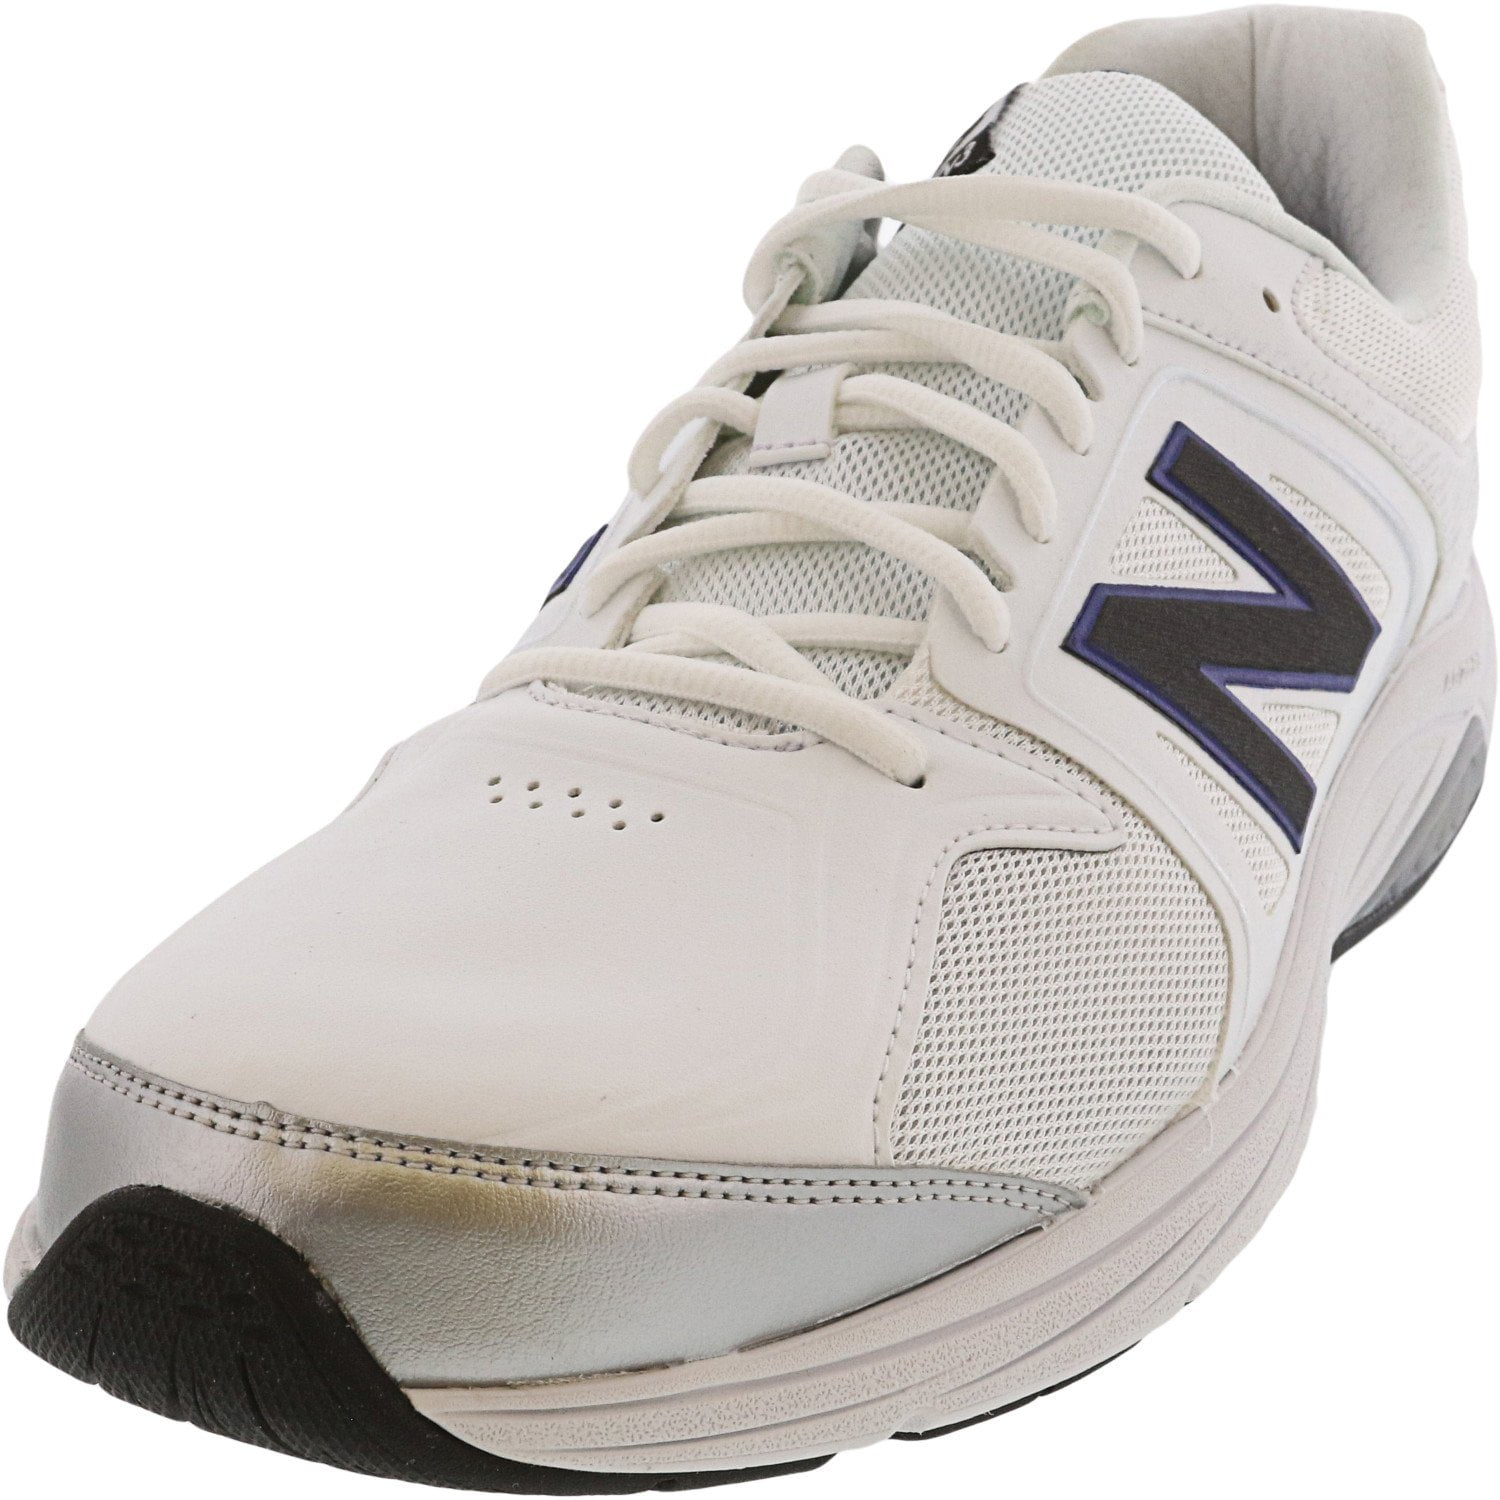 New Balance - New Balance MW847 Walking Shoe - 14W - Wt3 - Walmart.com ...